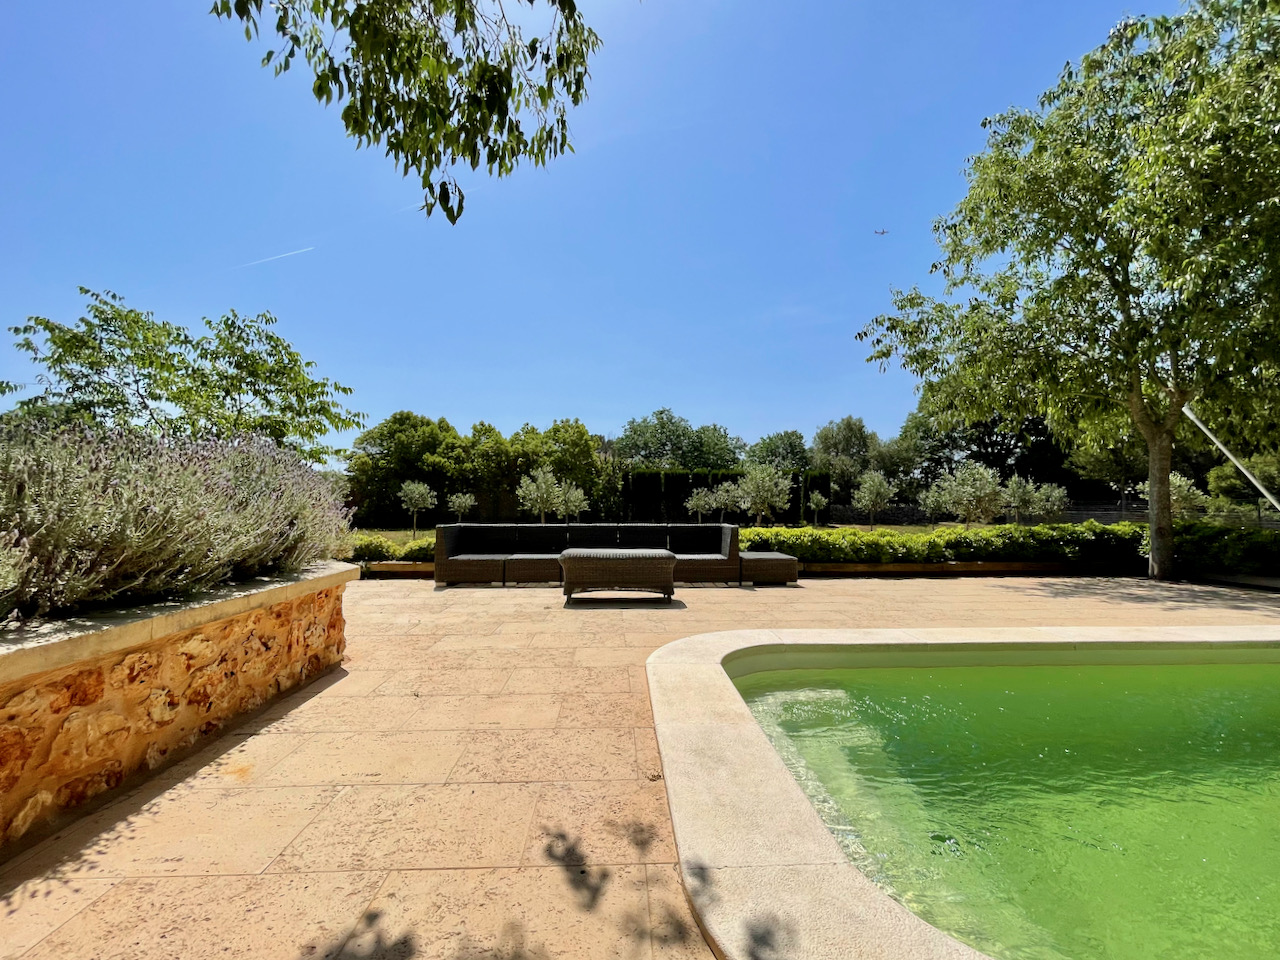 Fantastische rustikale Finca mit Schwimmbad in Sencelles, Mallorca.